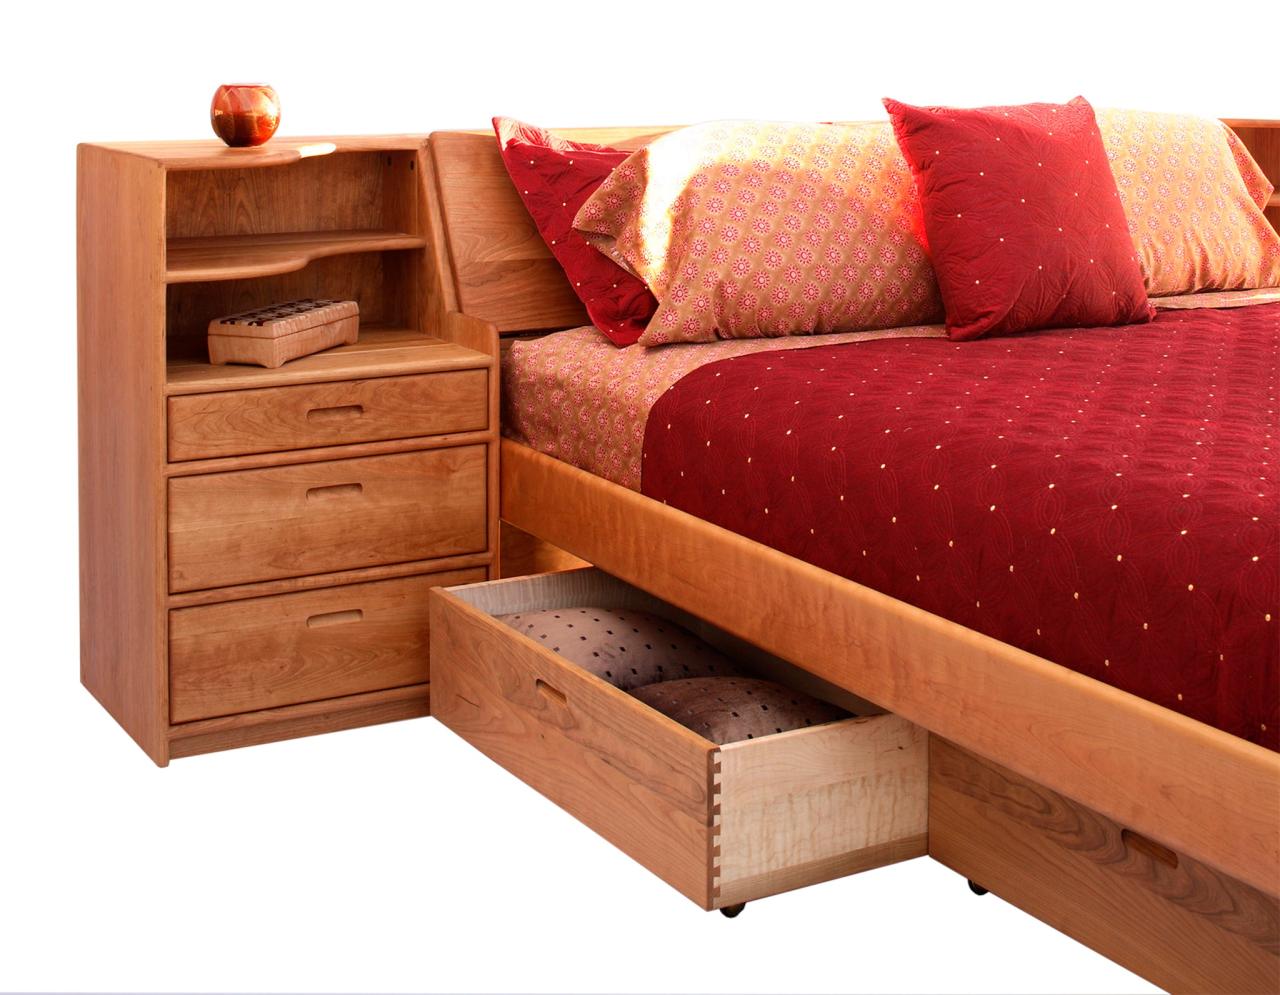 Artisanal Craftsmanship: Handcrafted Bedroom Decor Elements